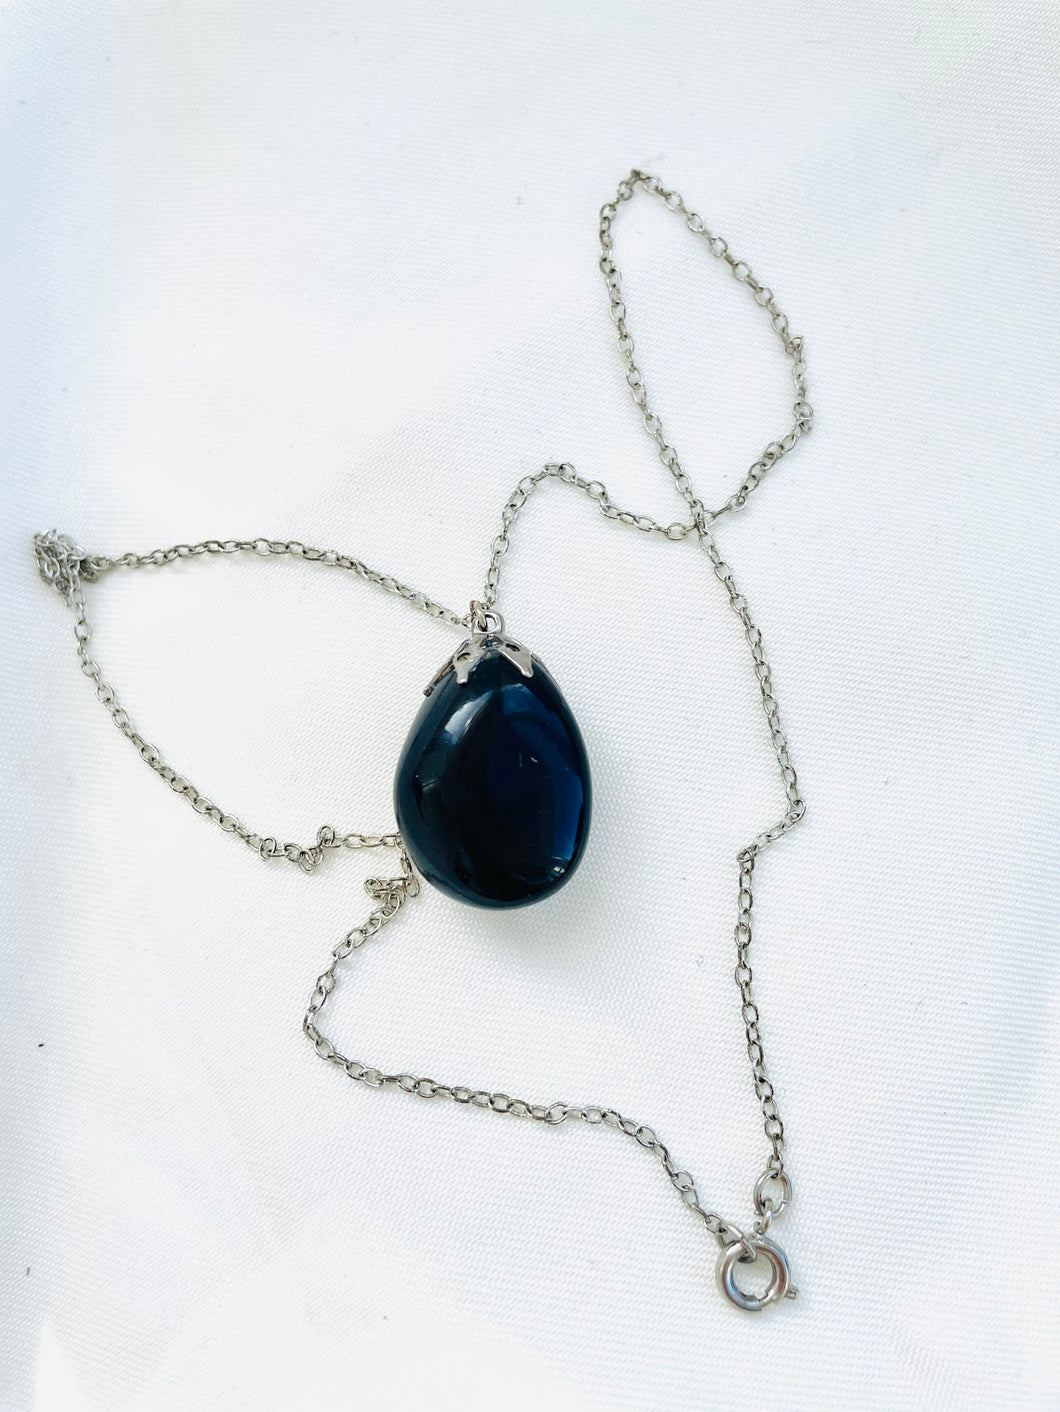 Black onyx Pendant, Polished stone pendant on silver chain, Vintage onyx Necklace